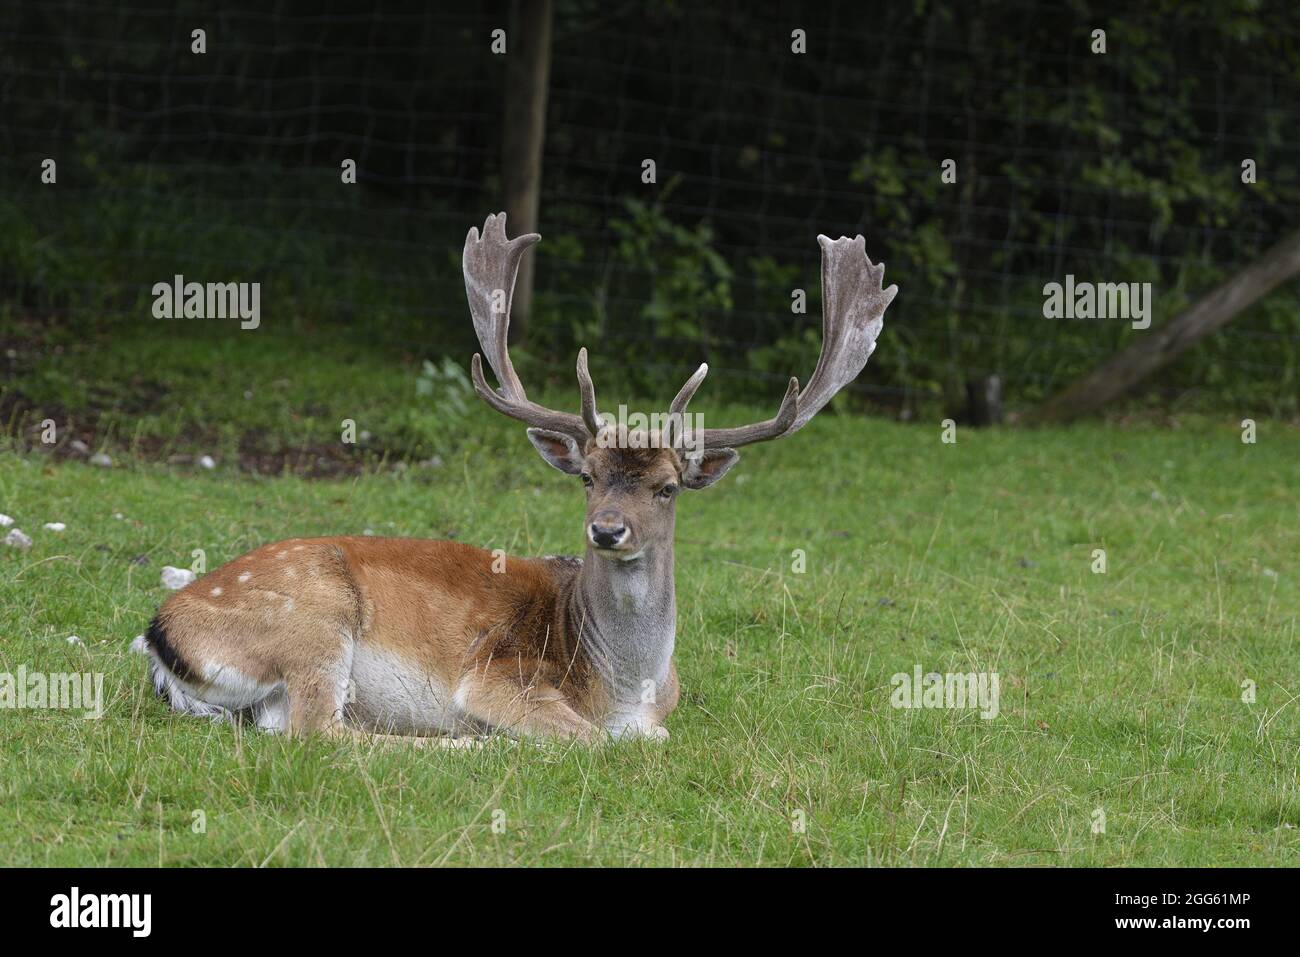 Cumberland Wildlife Park Grünau, Upper Austria, Austria. Fallow deer (Dama dama) Stock Photo